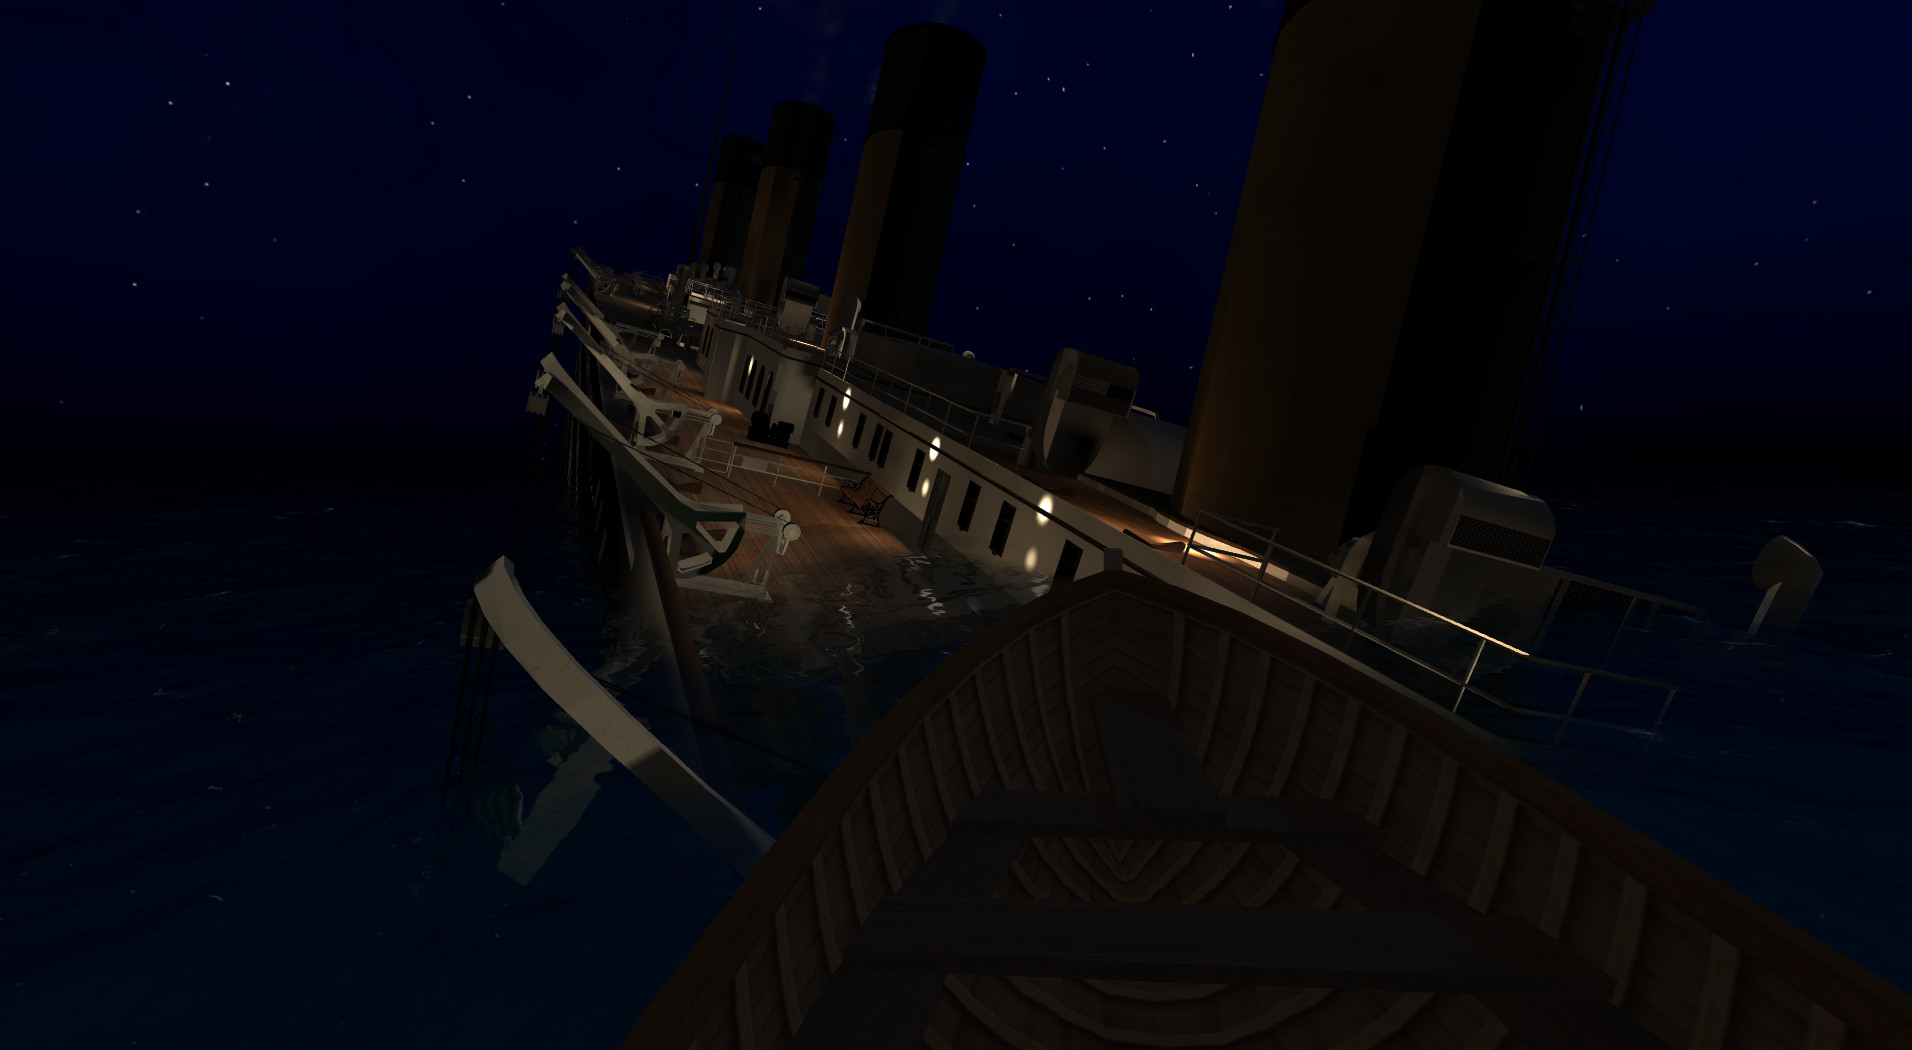 [$ 2.81] Titanic: The Experience Steam CD Key